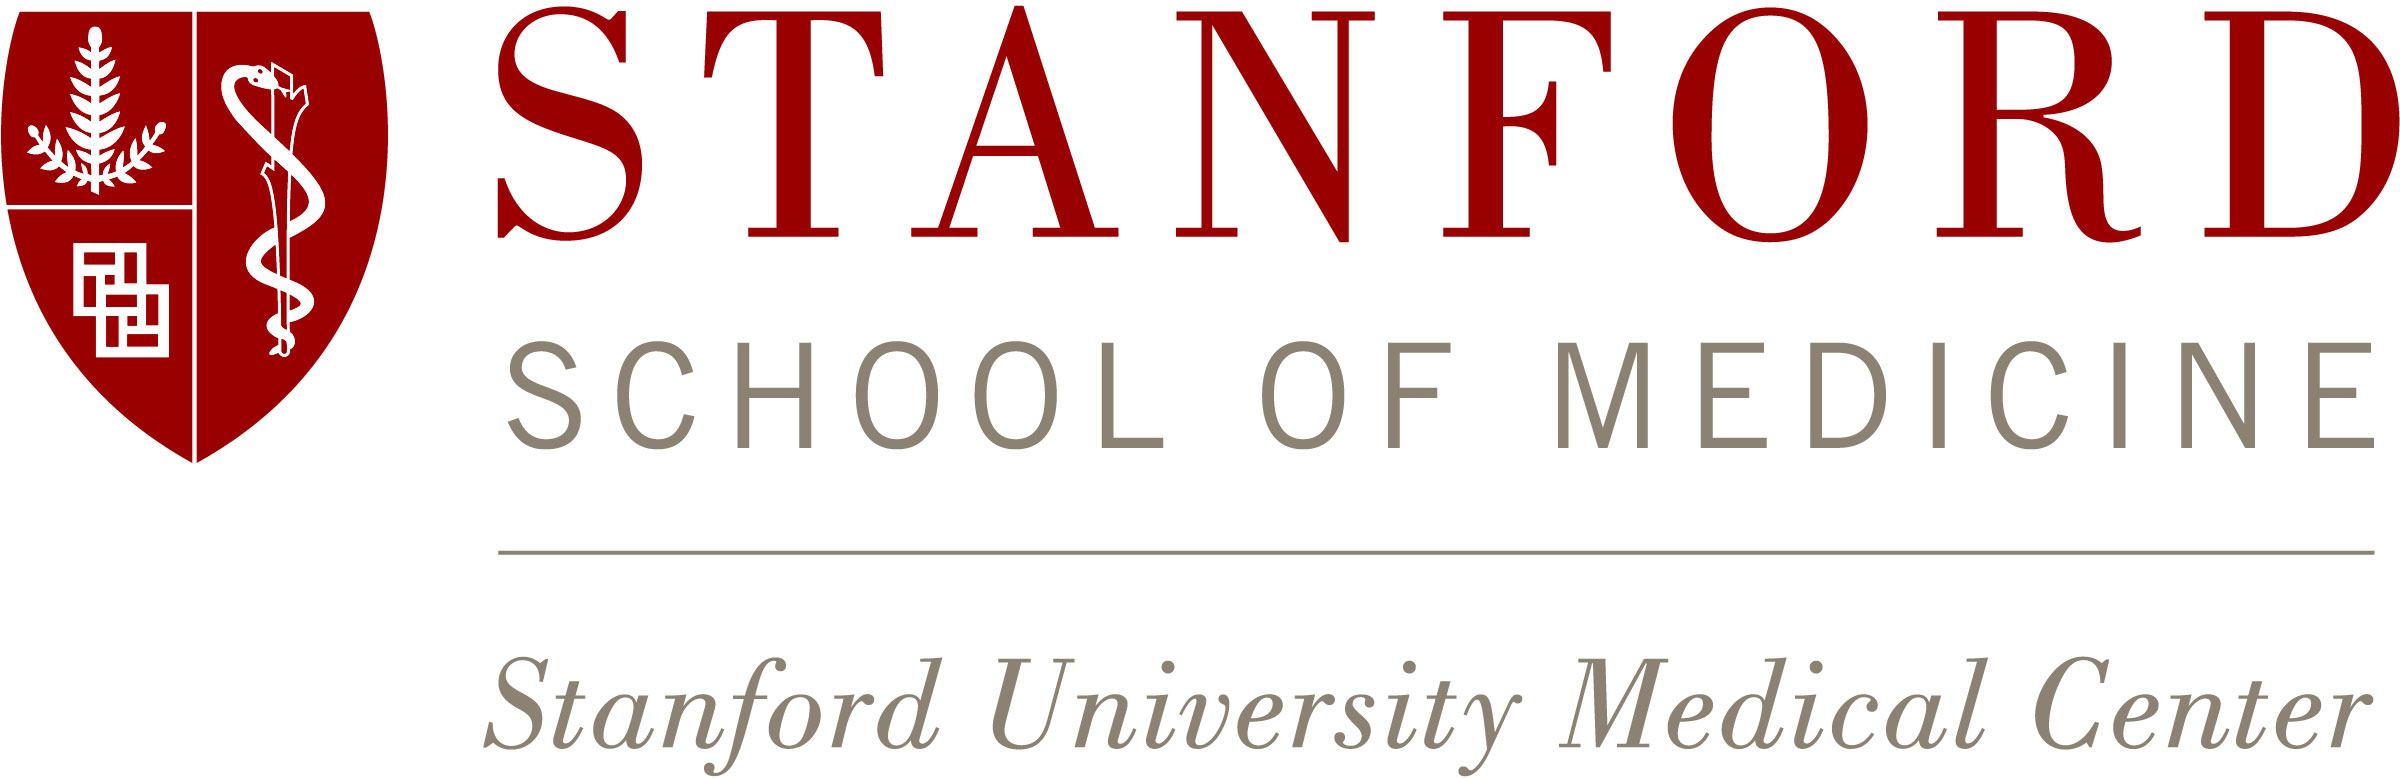 File:Stanford School of Medicine Logo.jpg - Wikimedia Commons